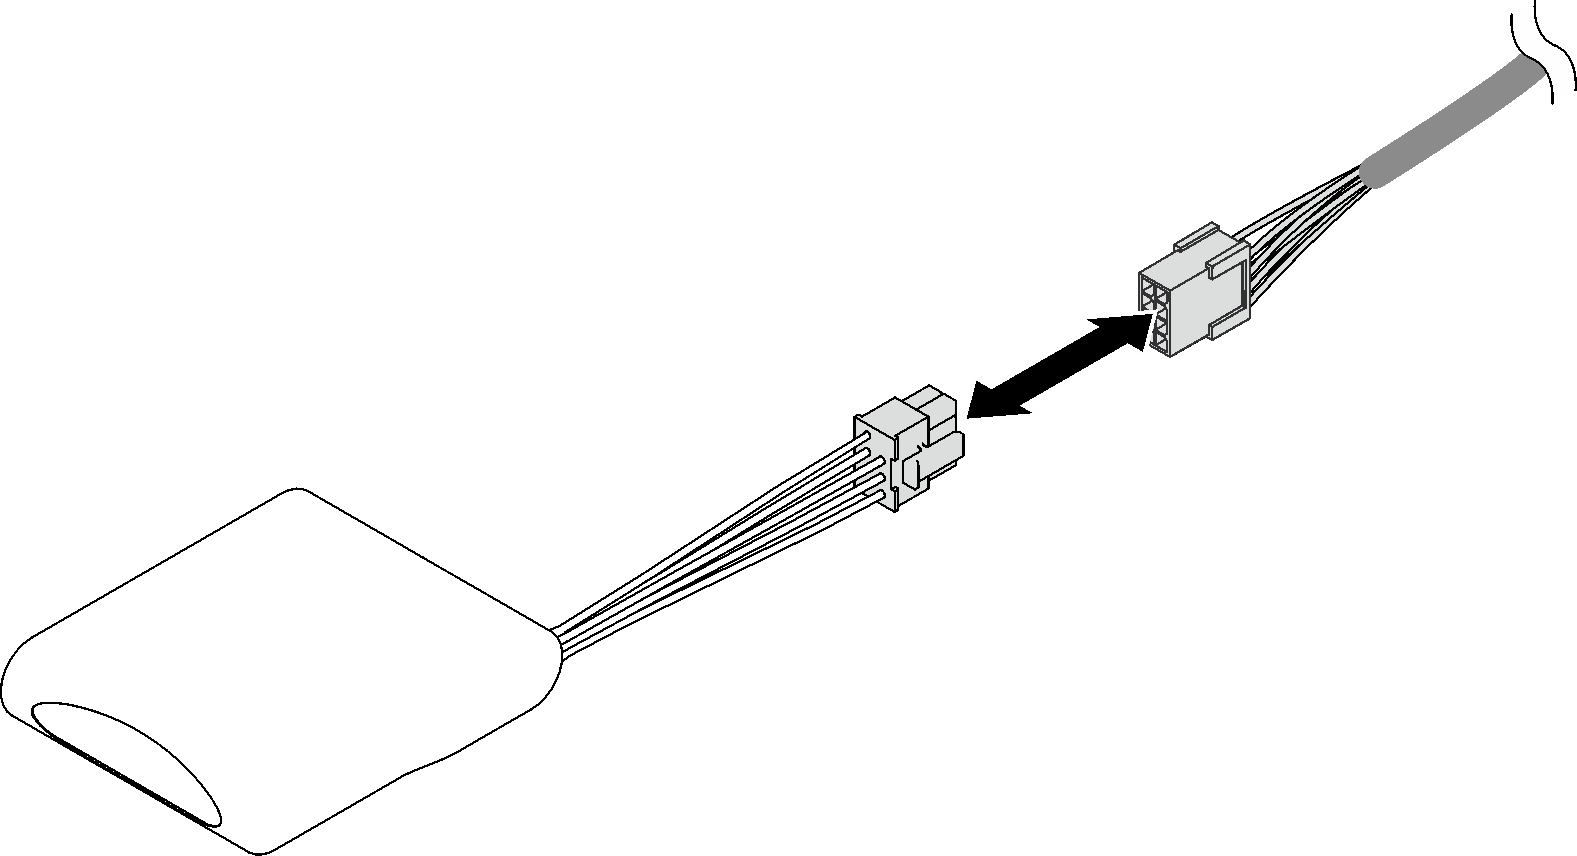 Flash power module cable connection